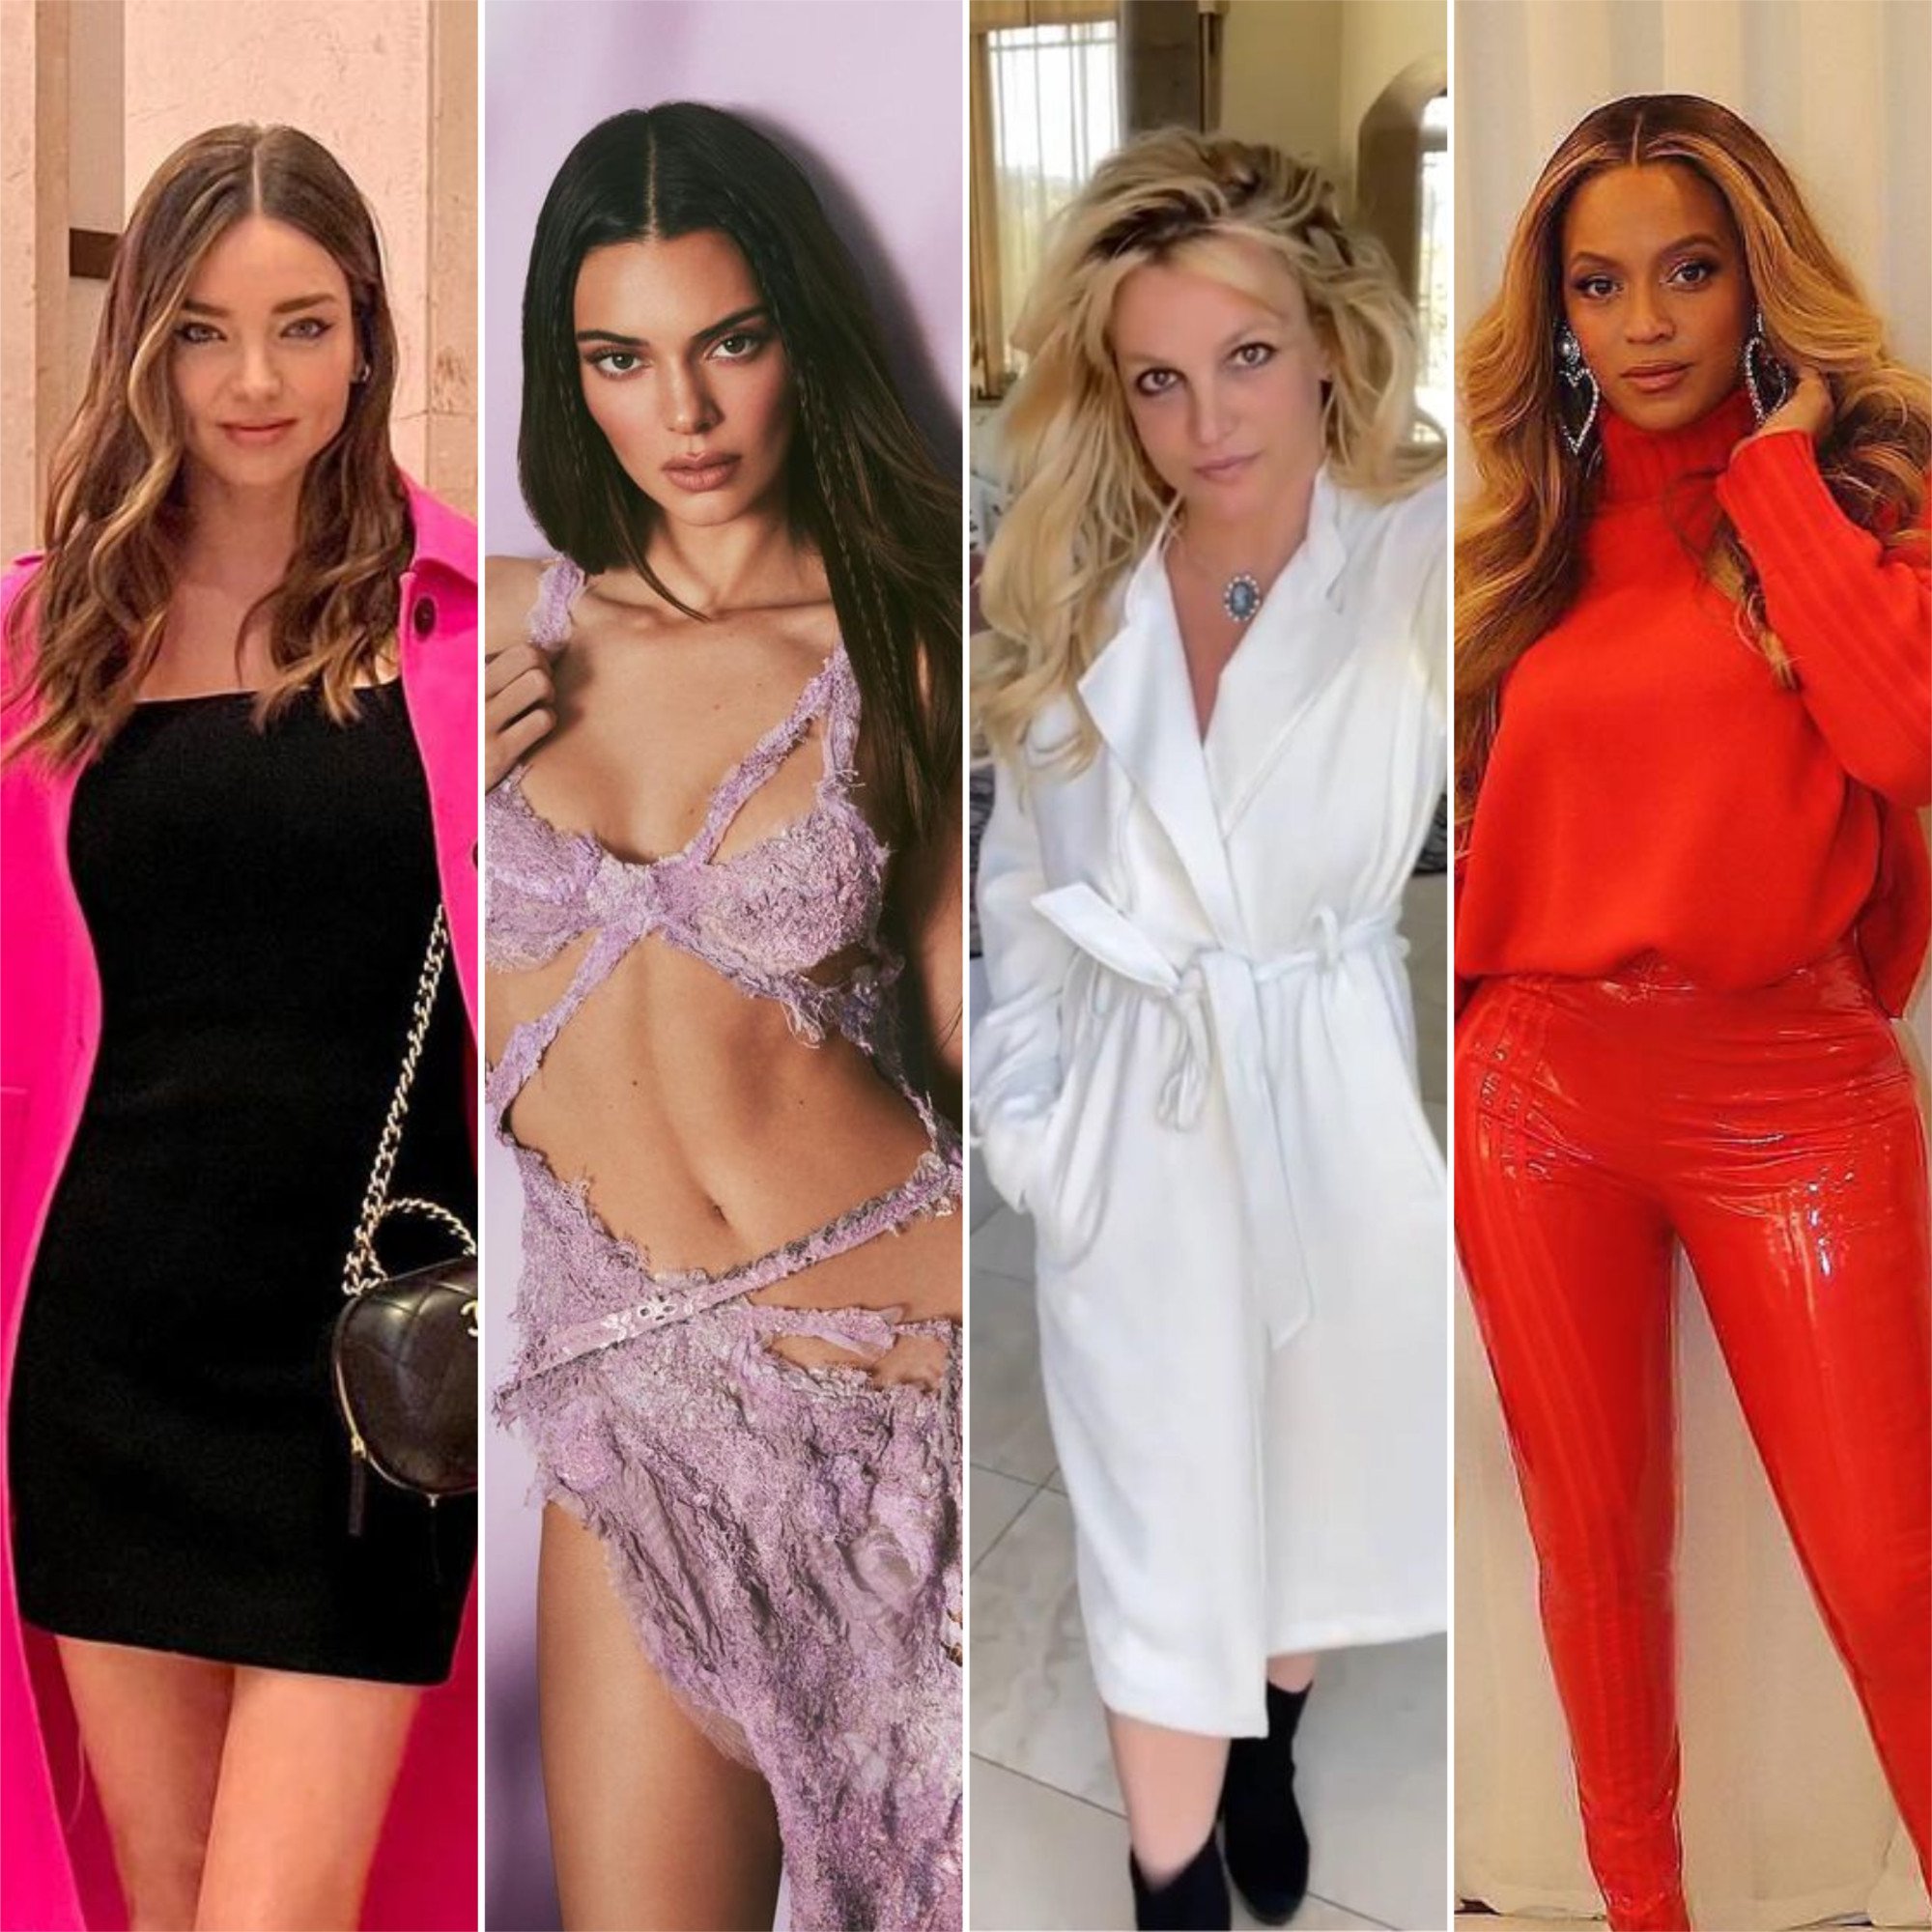 12 biggest celebrity Photoshop fails ever, from Kim Kardashian's